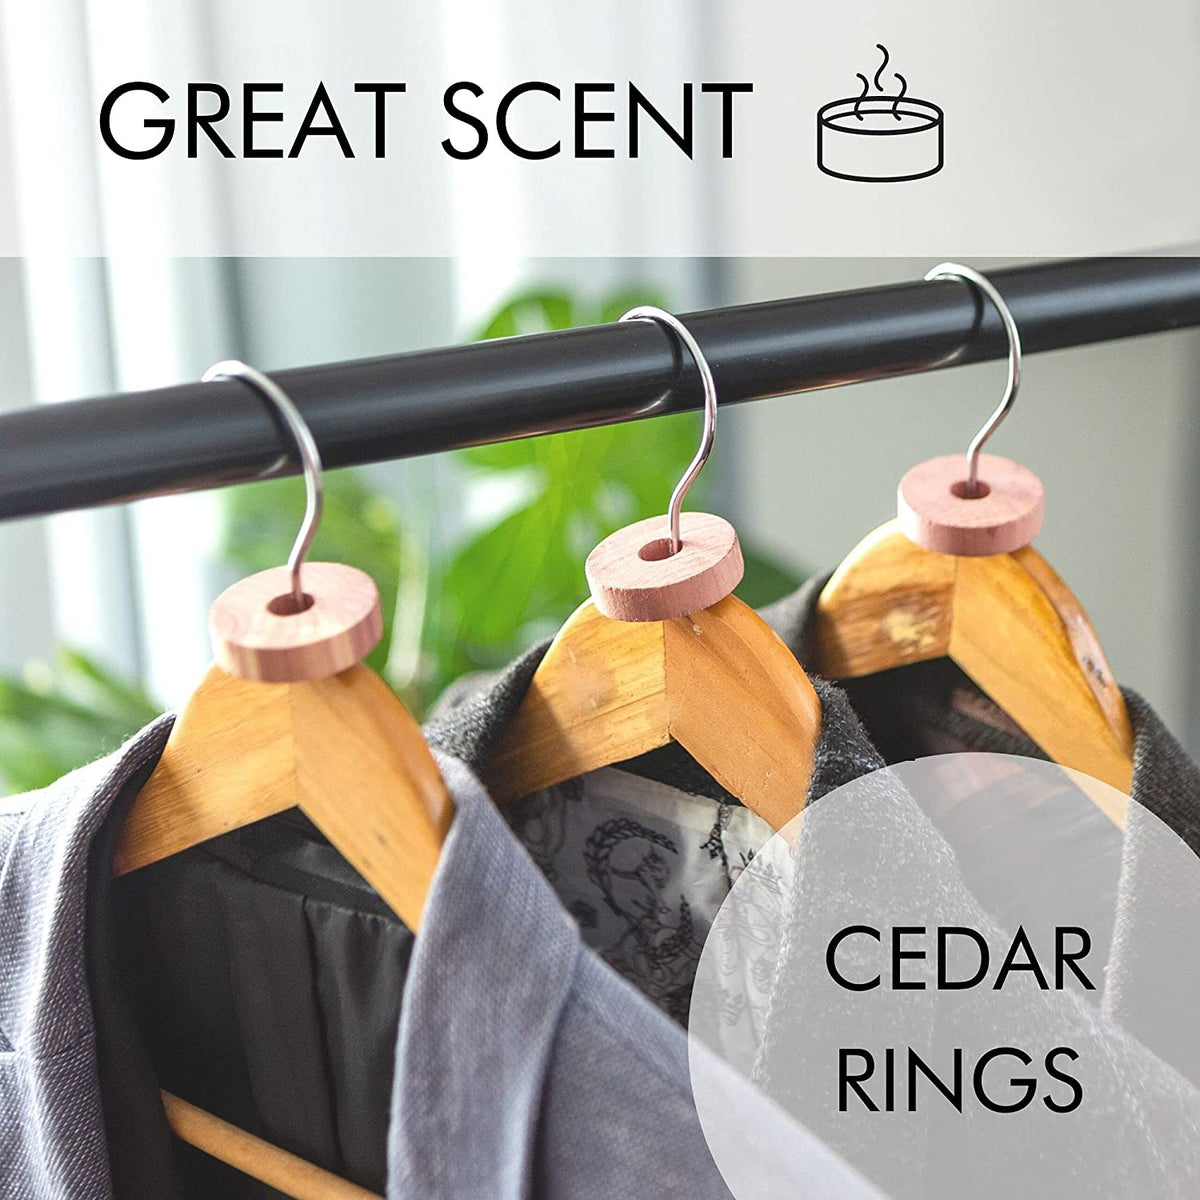 (12 pack) of Cedar Green Hanger Rings - 100% Natural Cedar